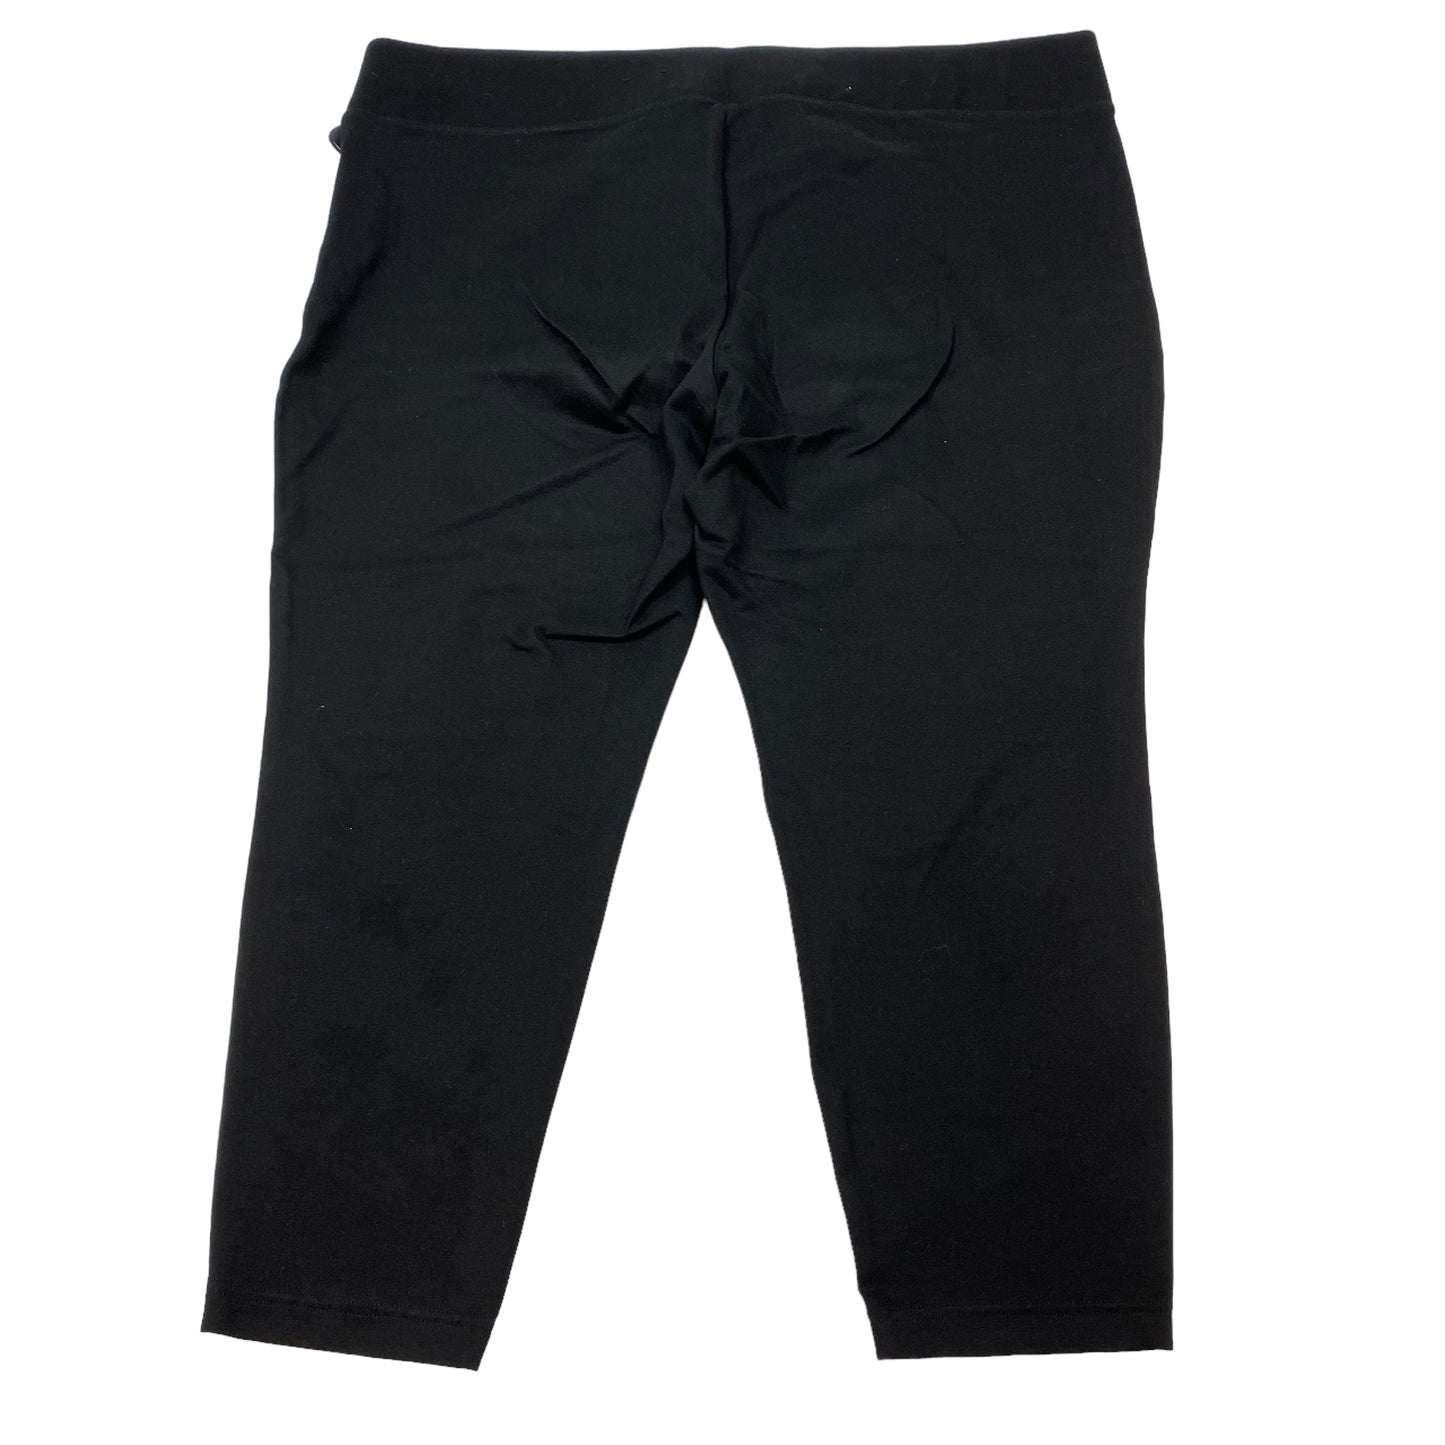 Black Pants Leggings Torrid, Size 4x